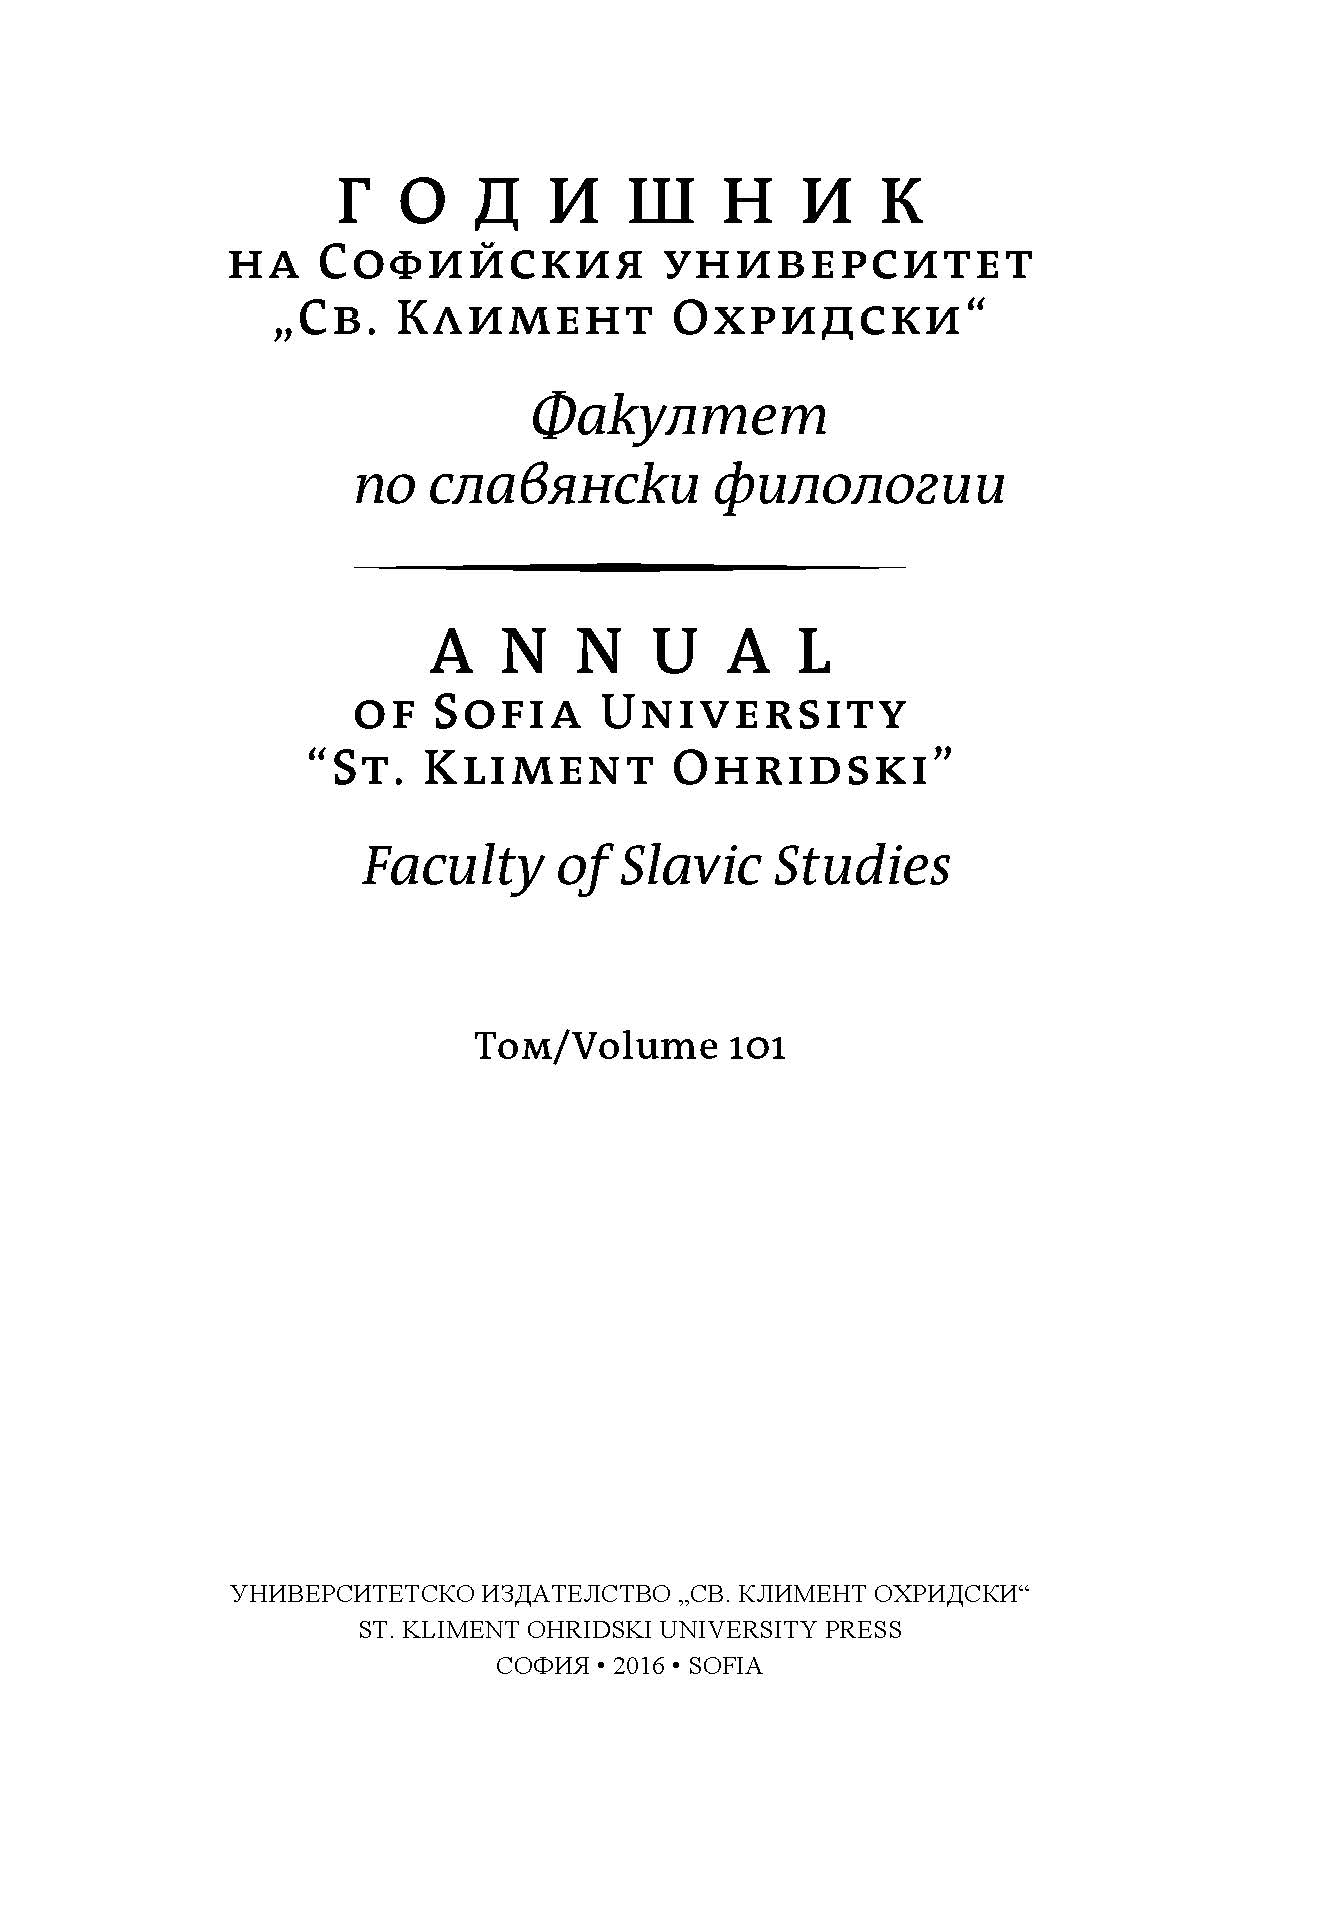 Годишник на Софийския университет „Св. Климент Охридски“, Факултет по славянски филологии